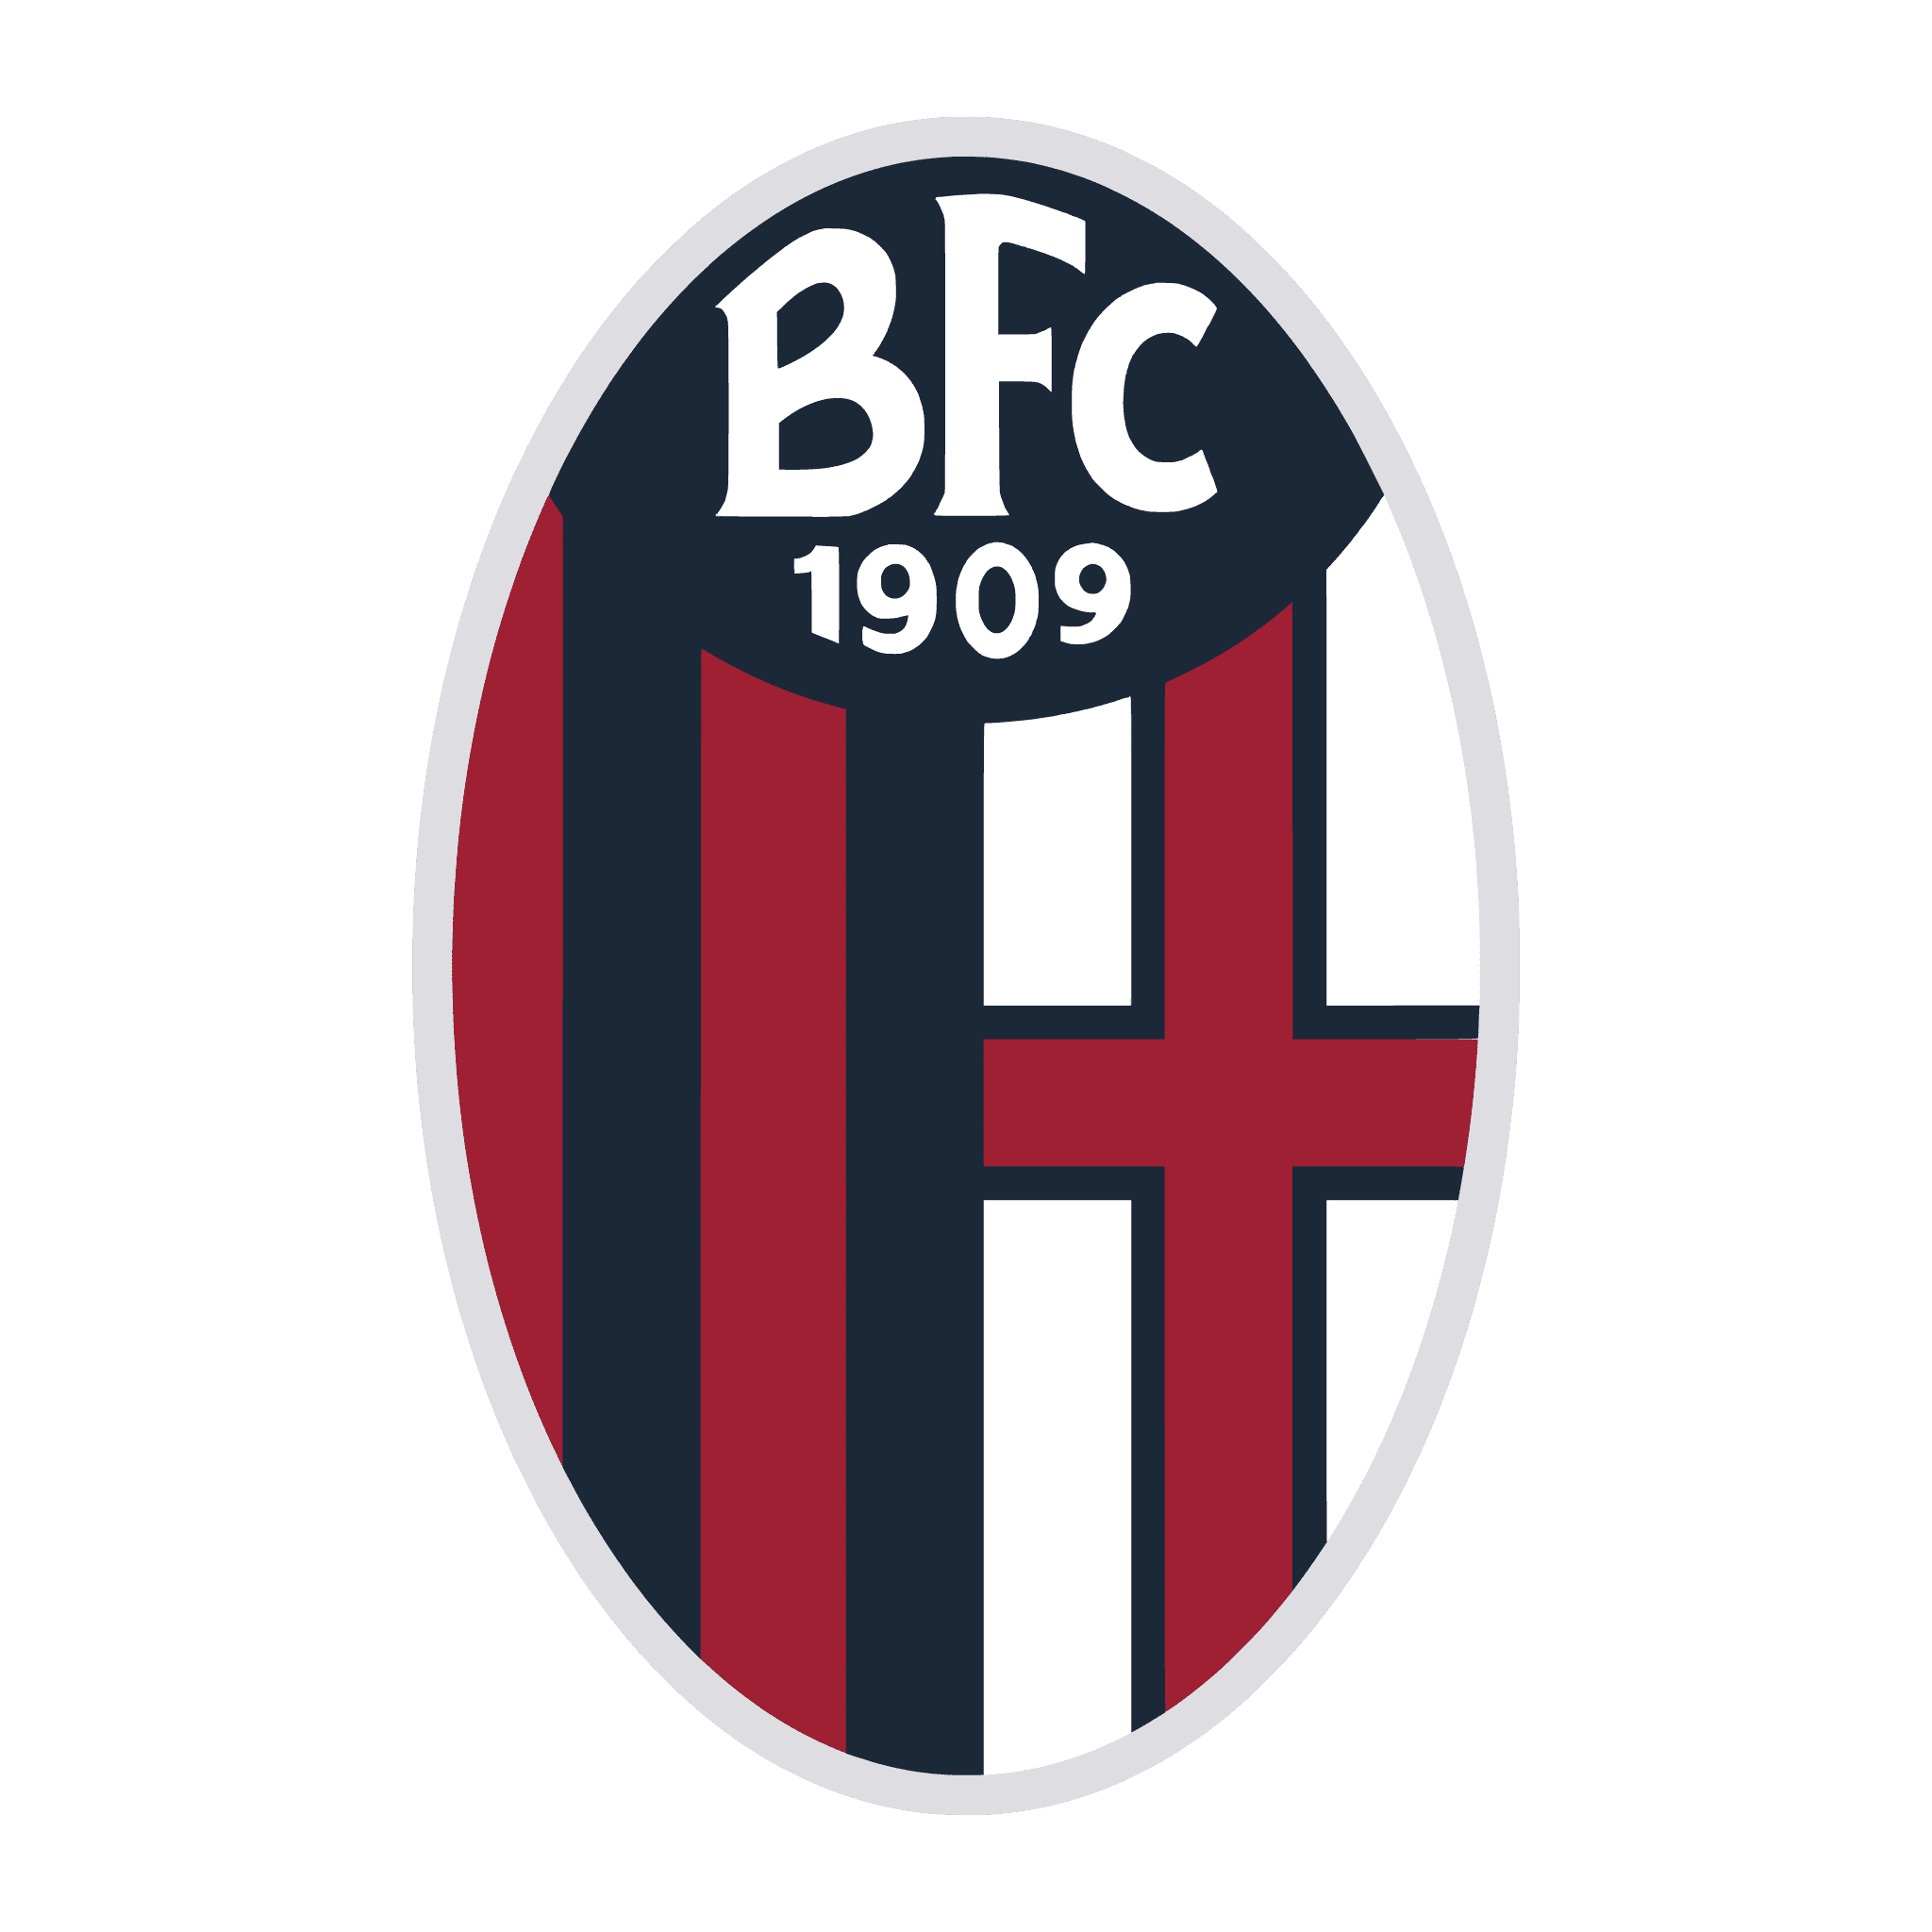 brasao do bologna football club 1909